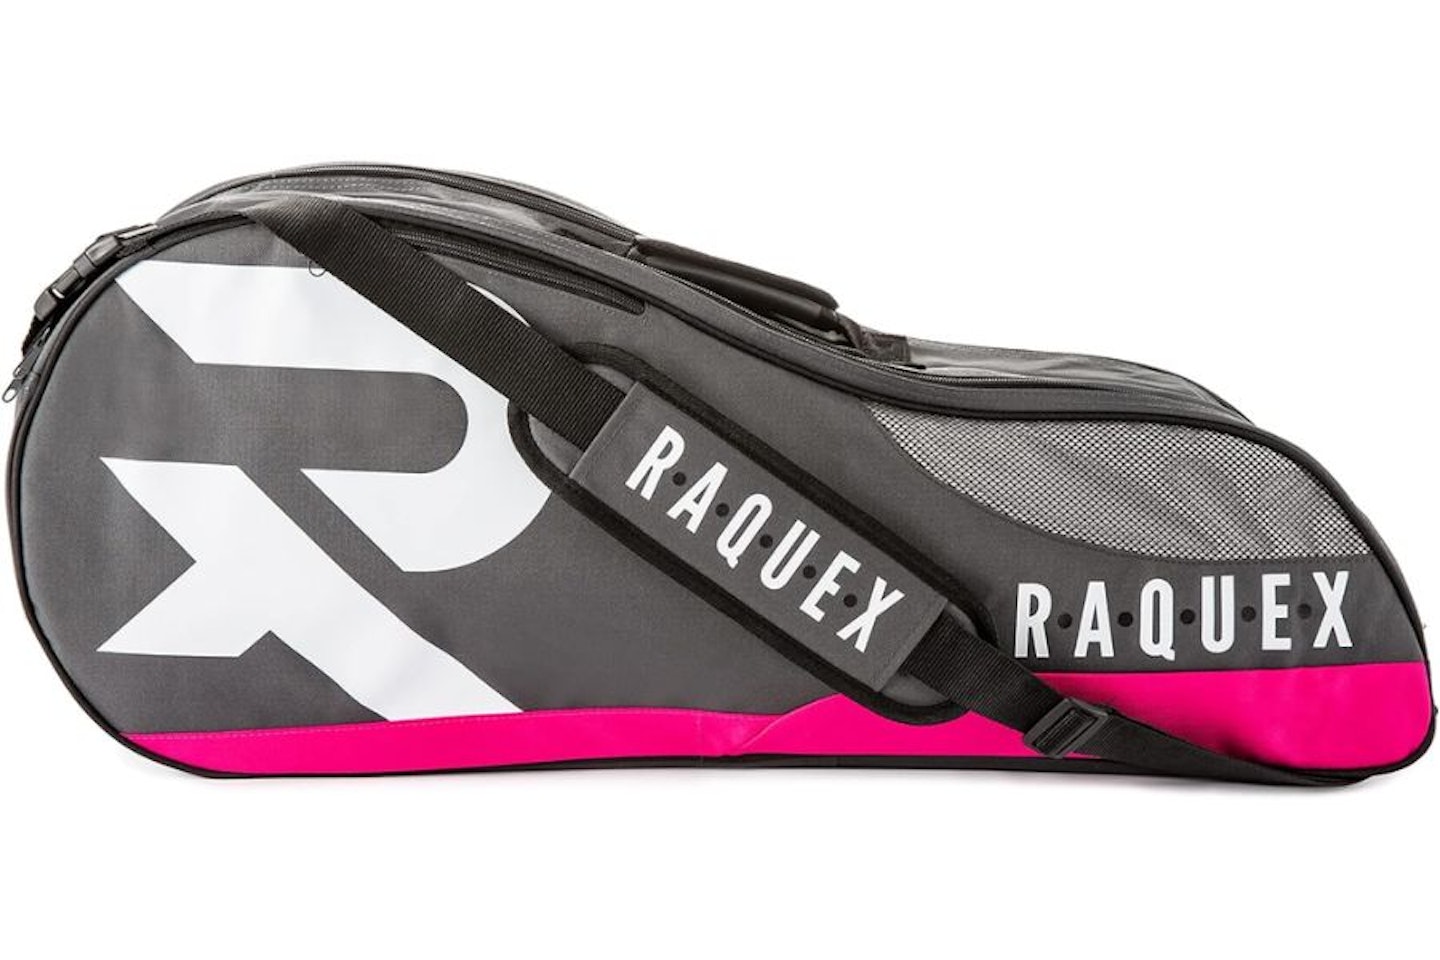 Raquex Bag For Tennis, Badminton and Squash